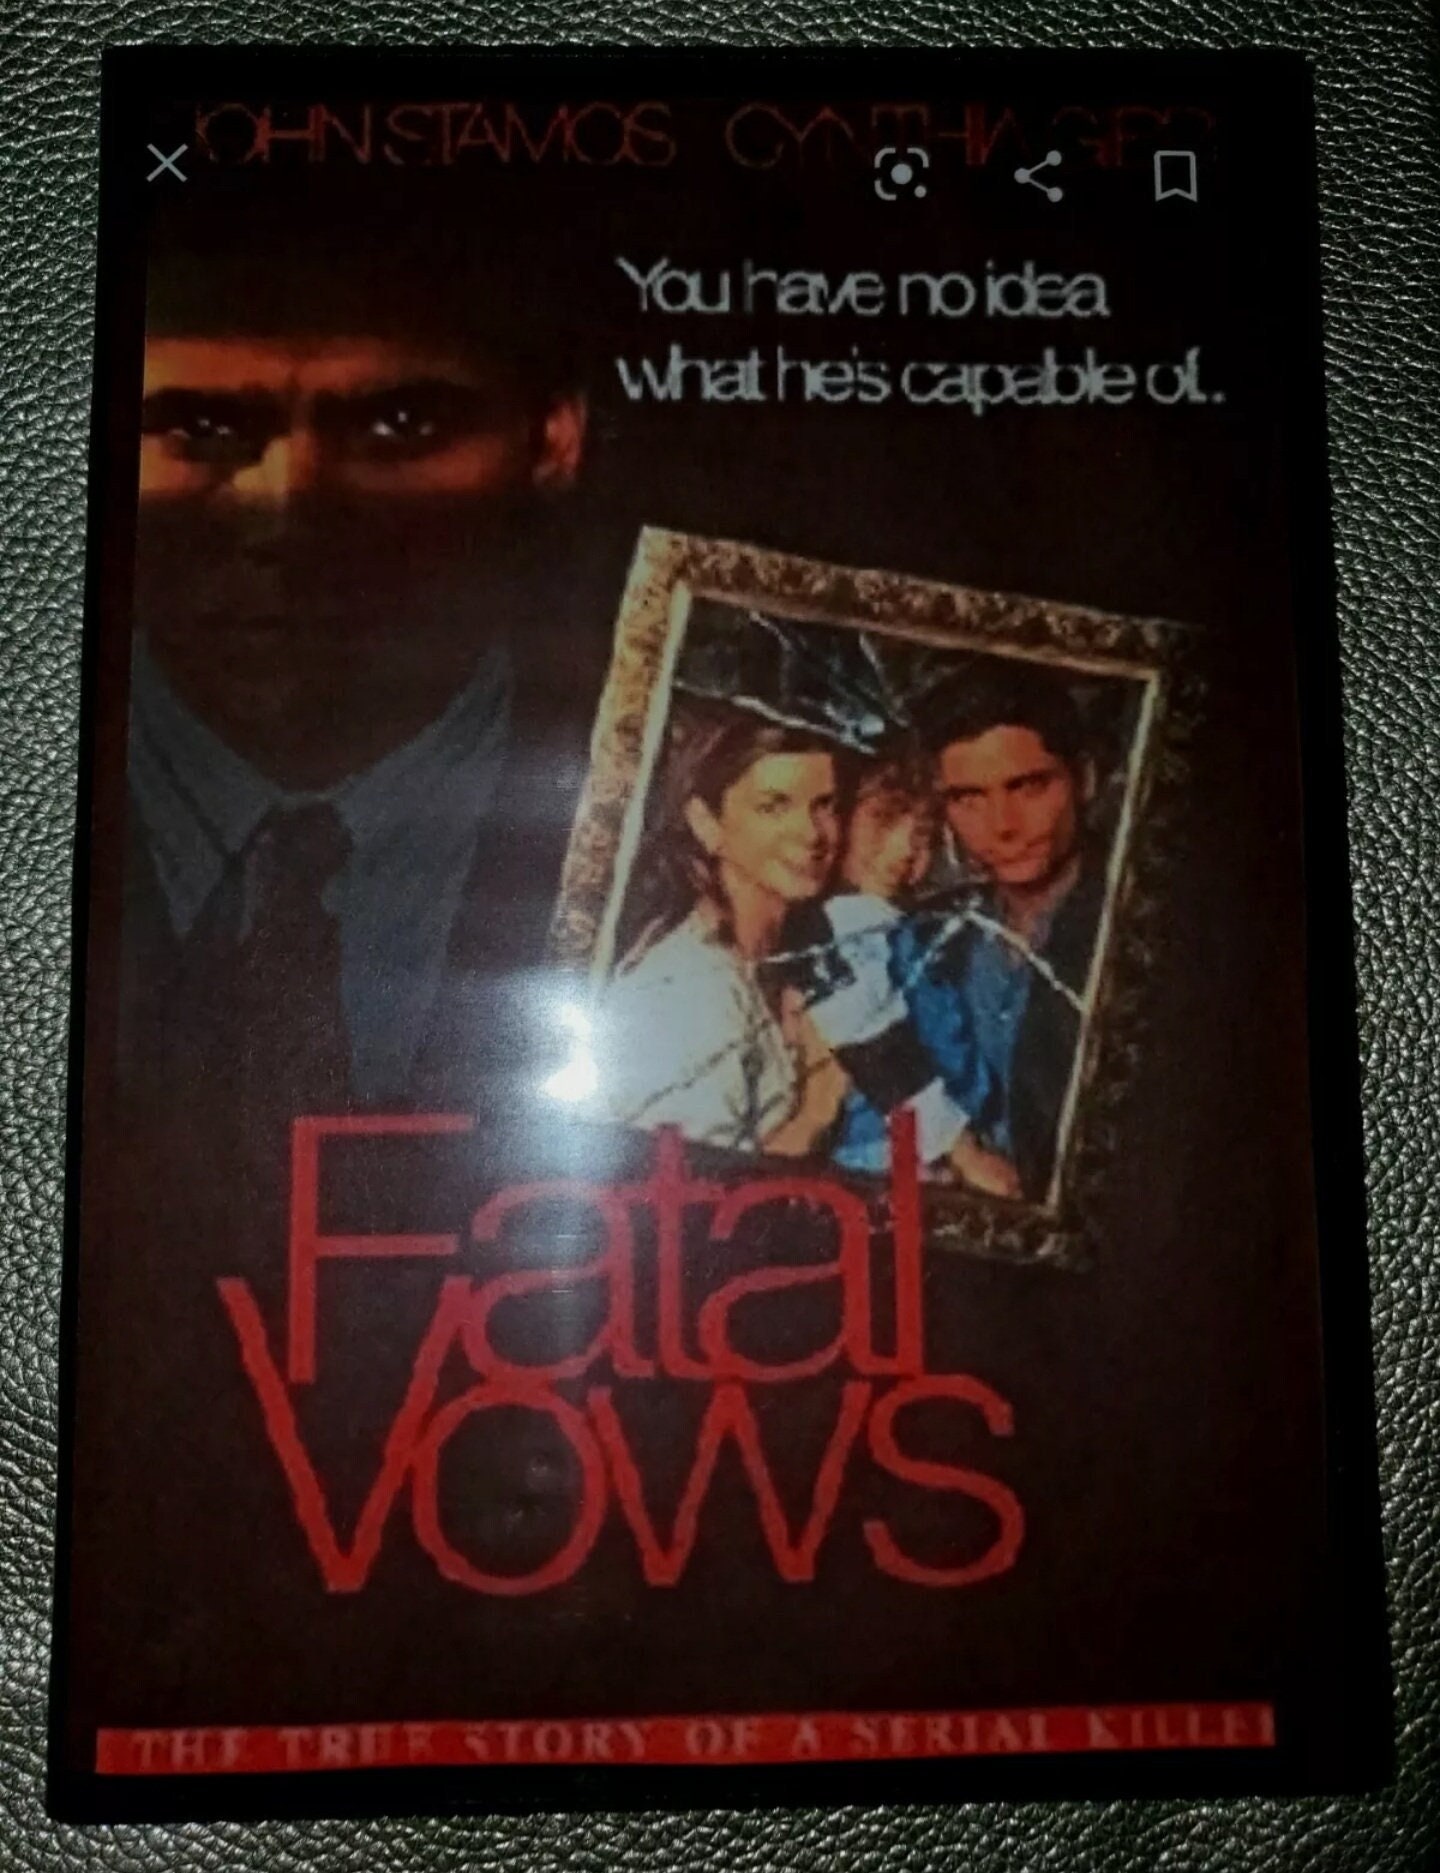 Fatal Vows 